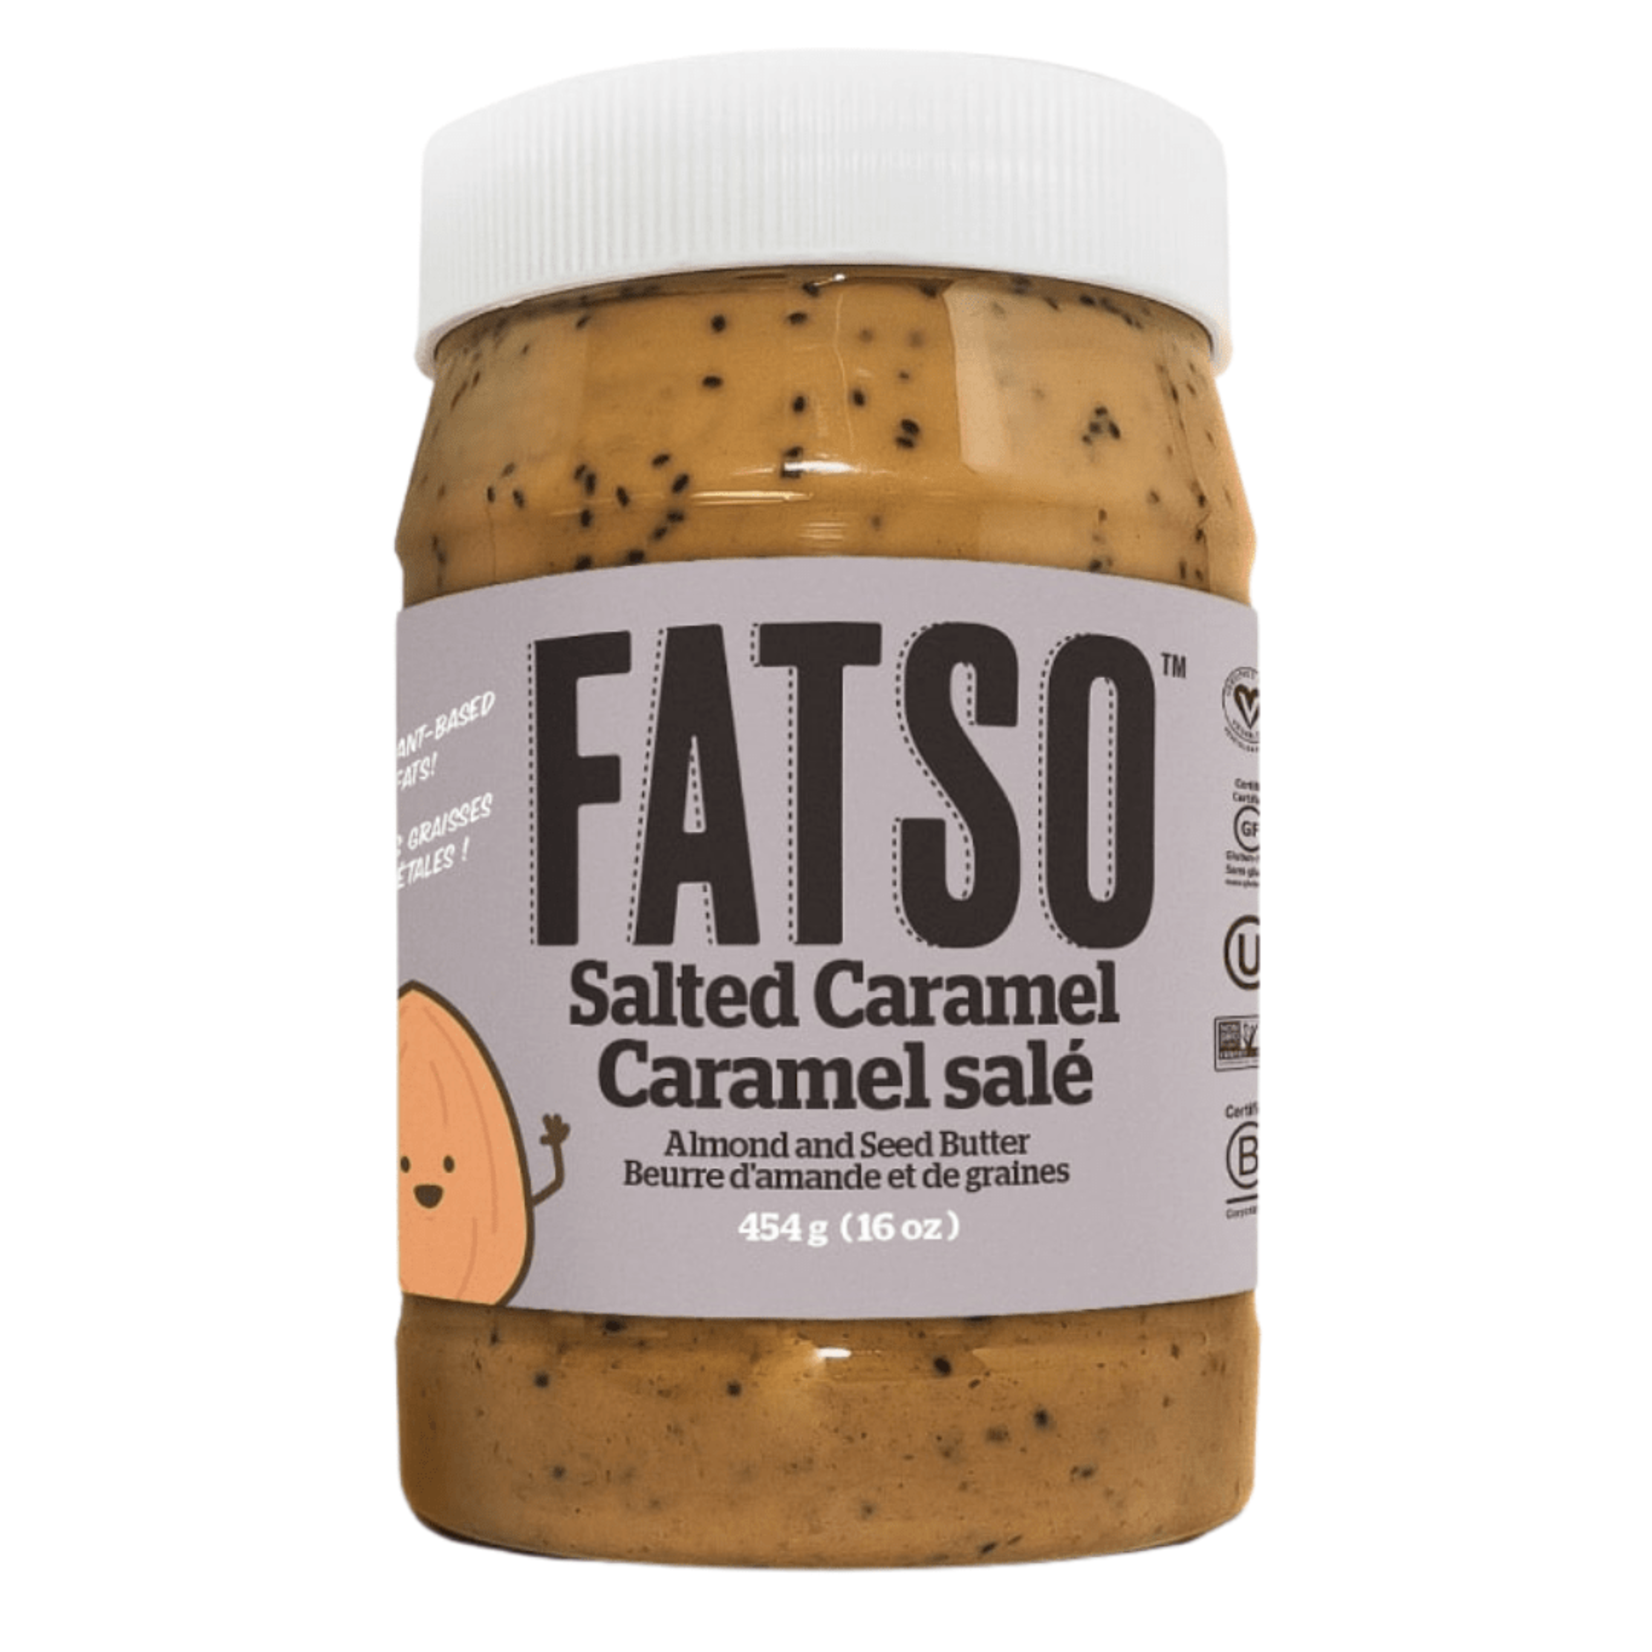 Fatso Fatso Salted Caramel